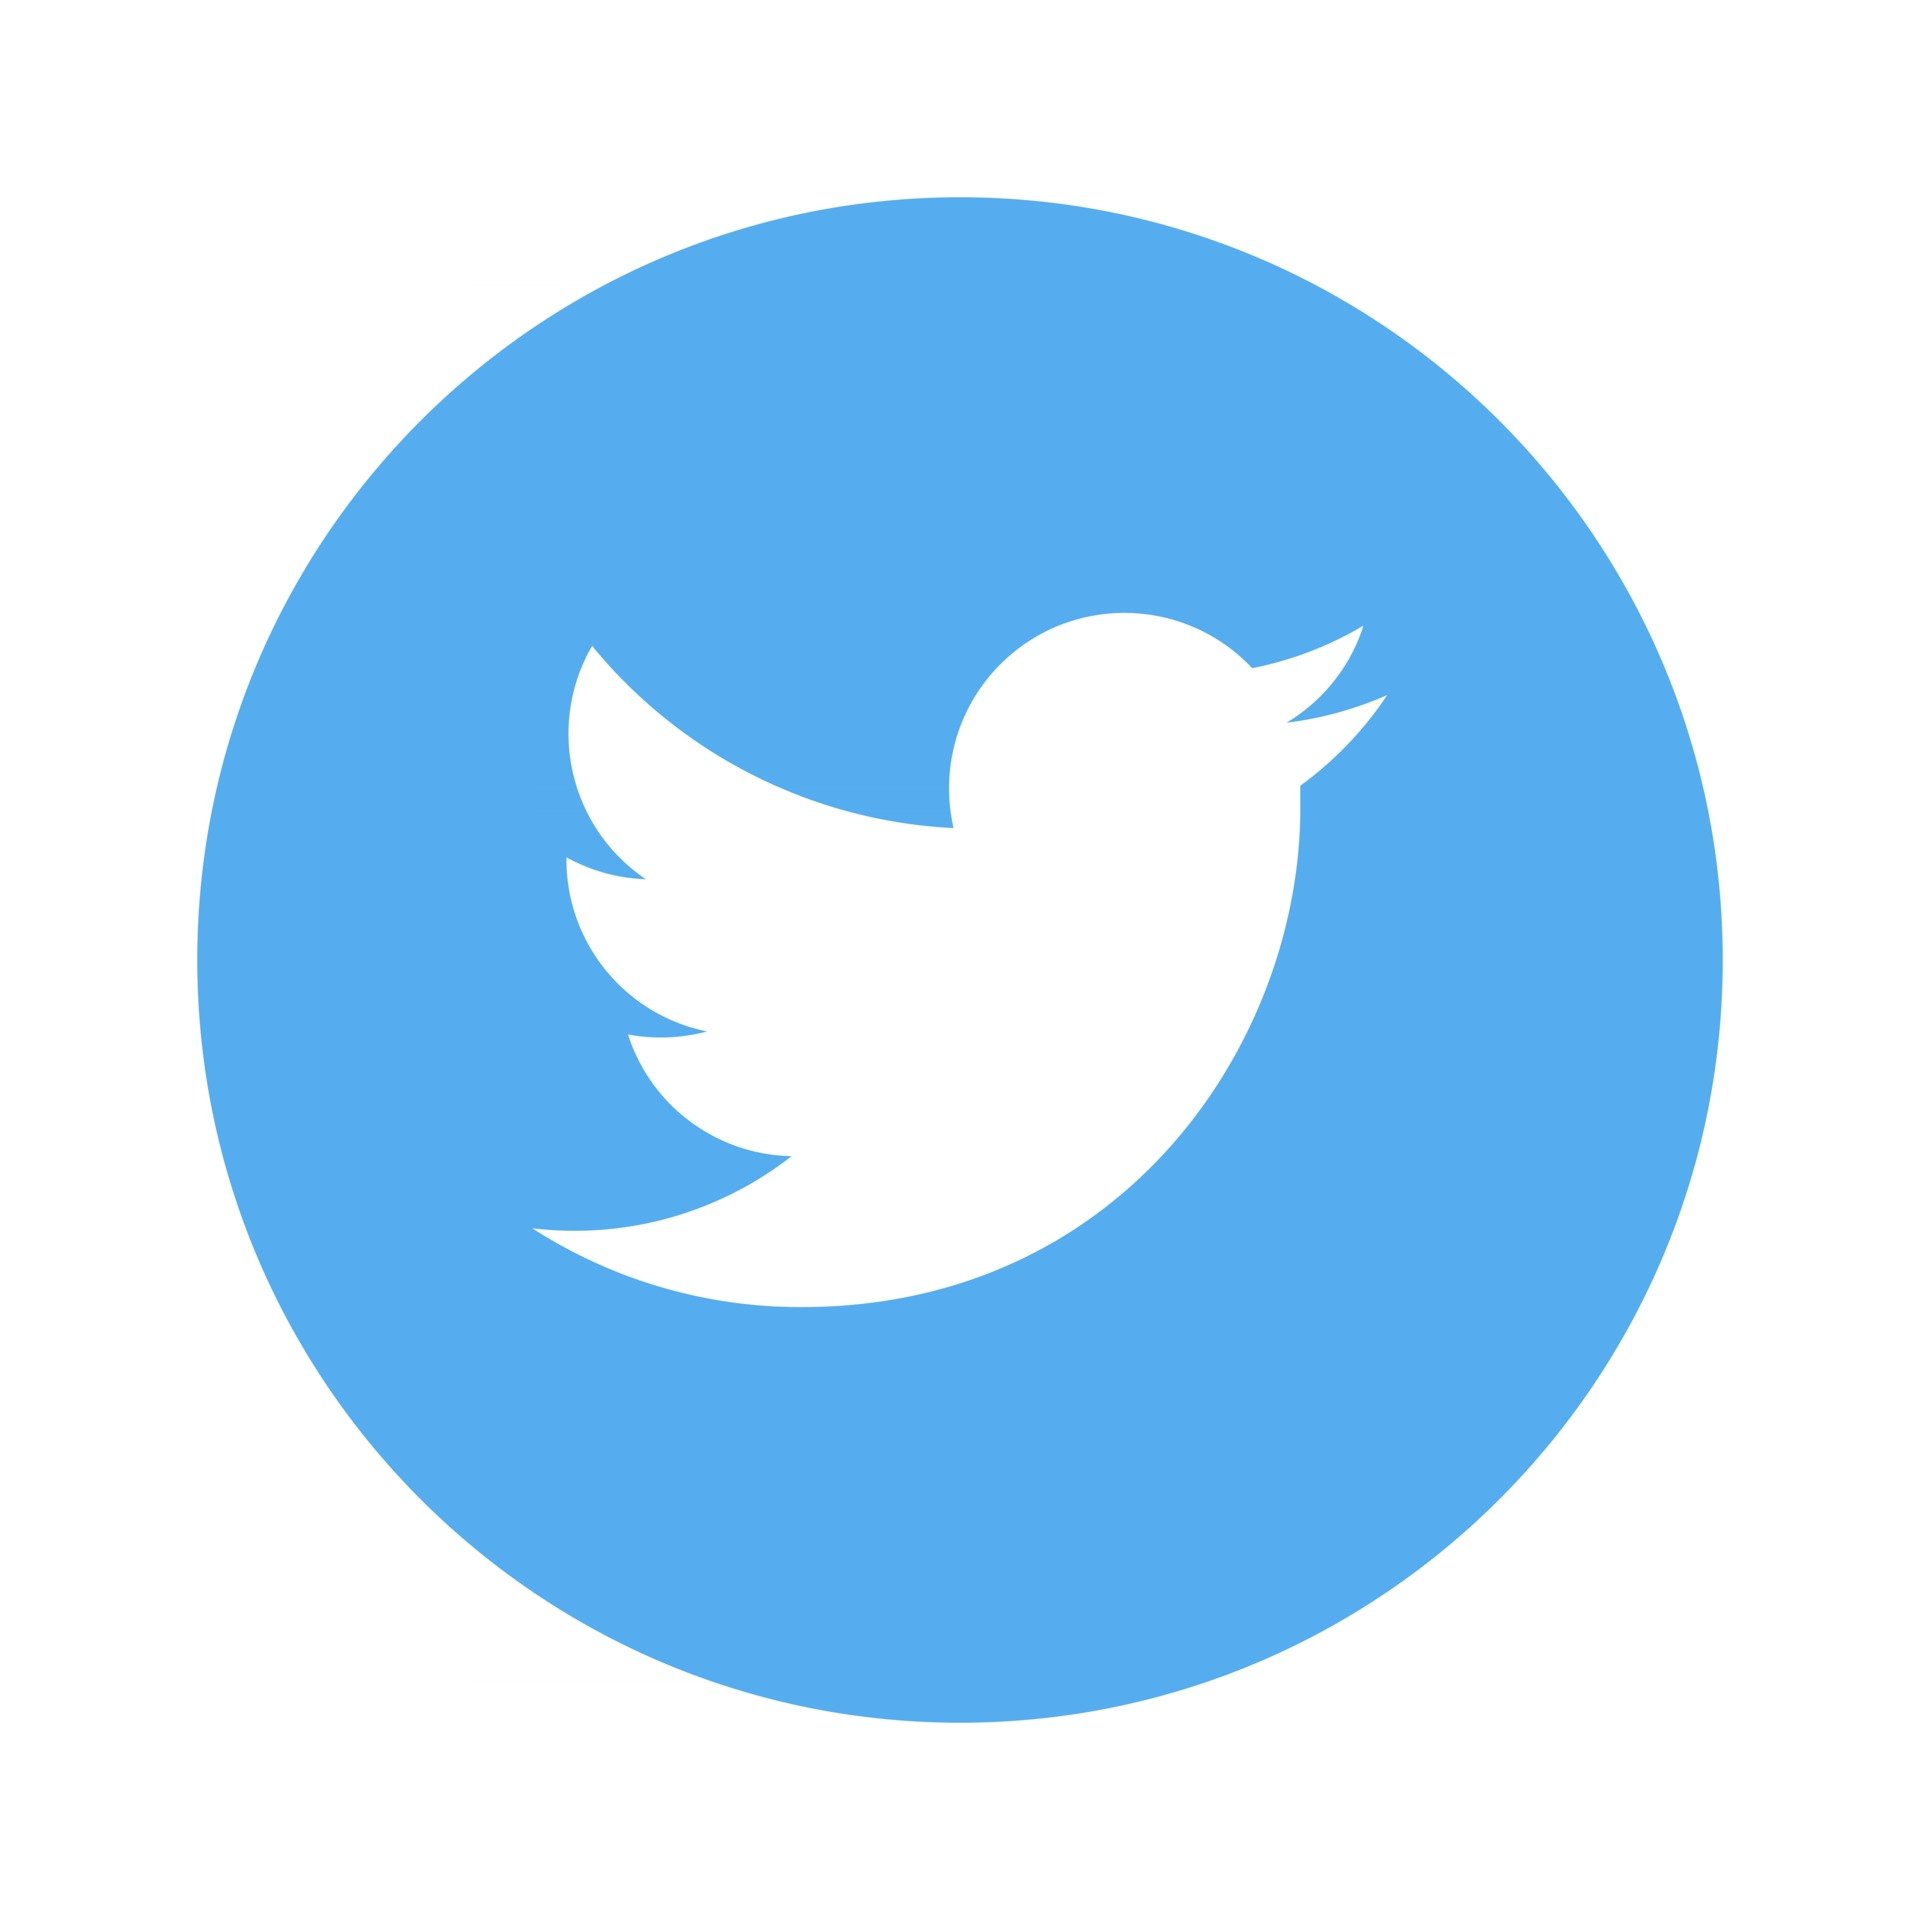 Twitter logo black generated